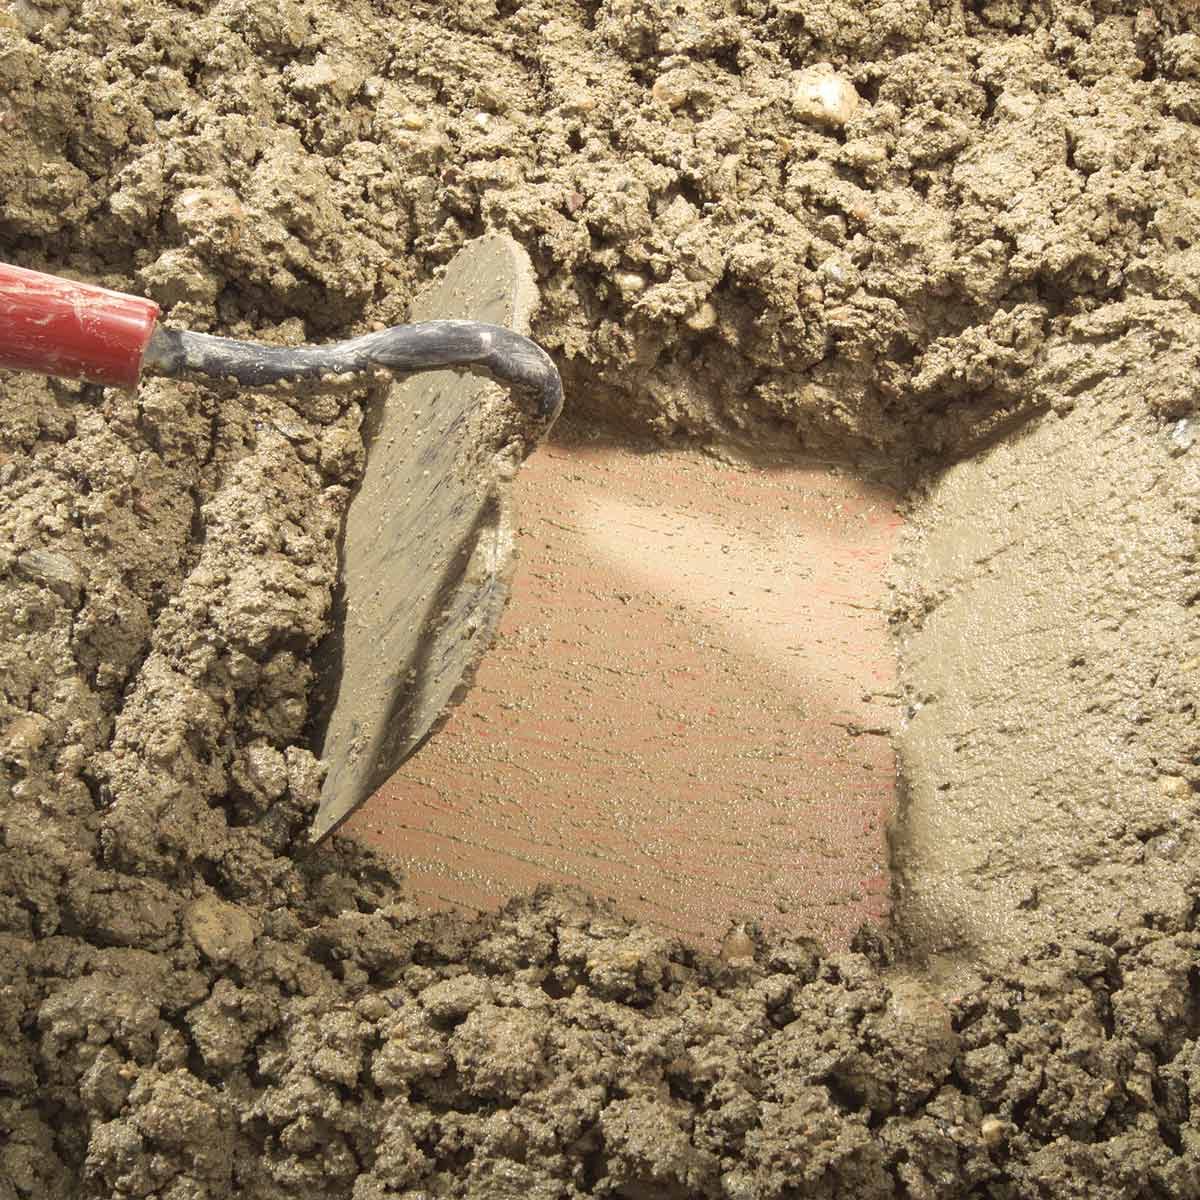 Ready Mix Concrete: The Dangers Of DIY Concrete Pouring